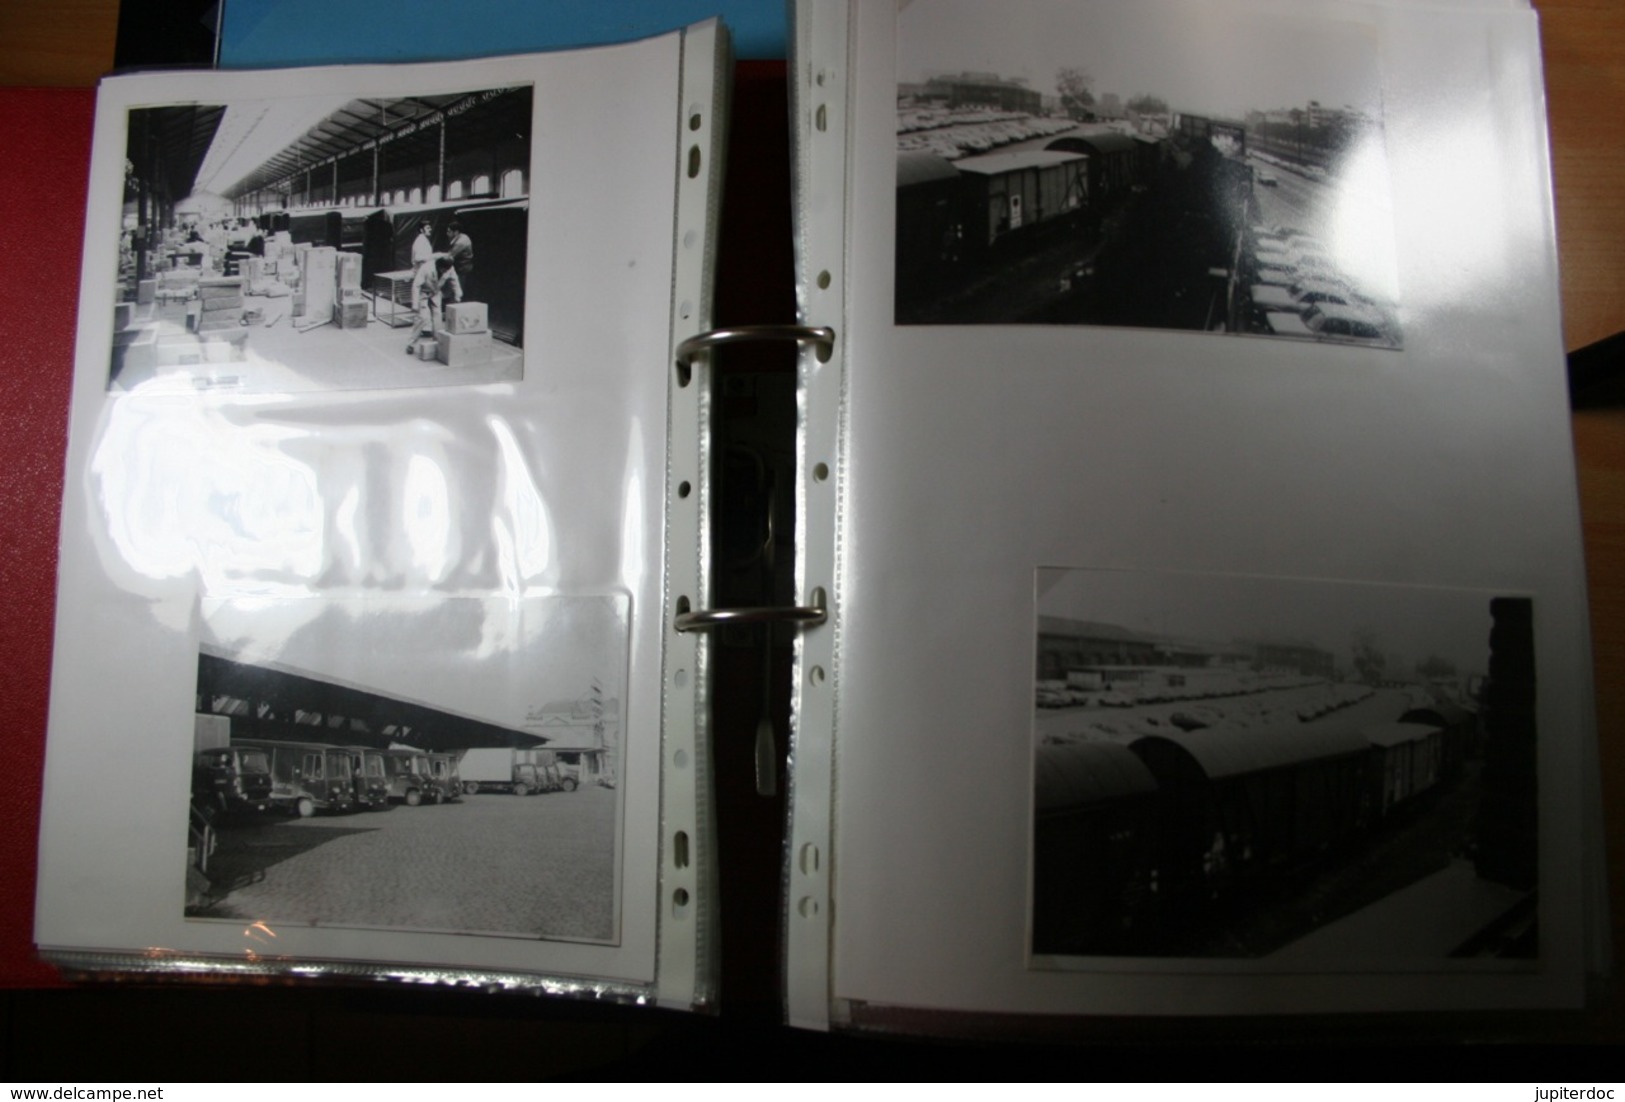 Chemin de fer Tram Gare Reproductions de cartes postales, copies de documents, coupures de presse, photos originales...